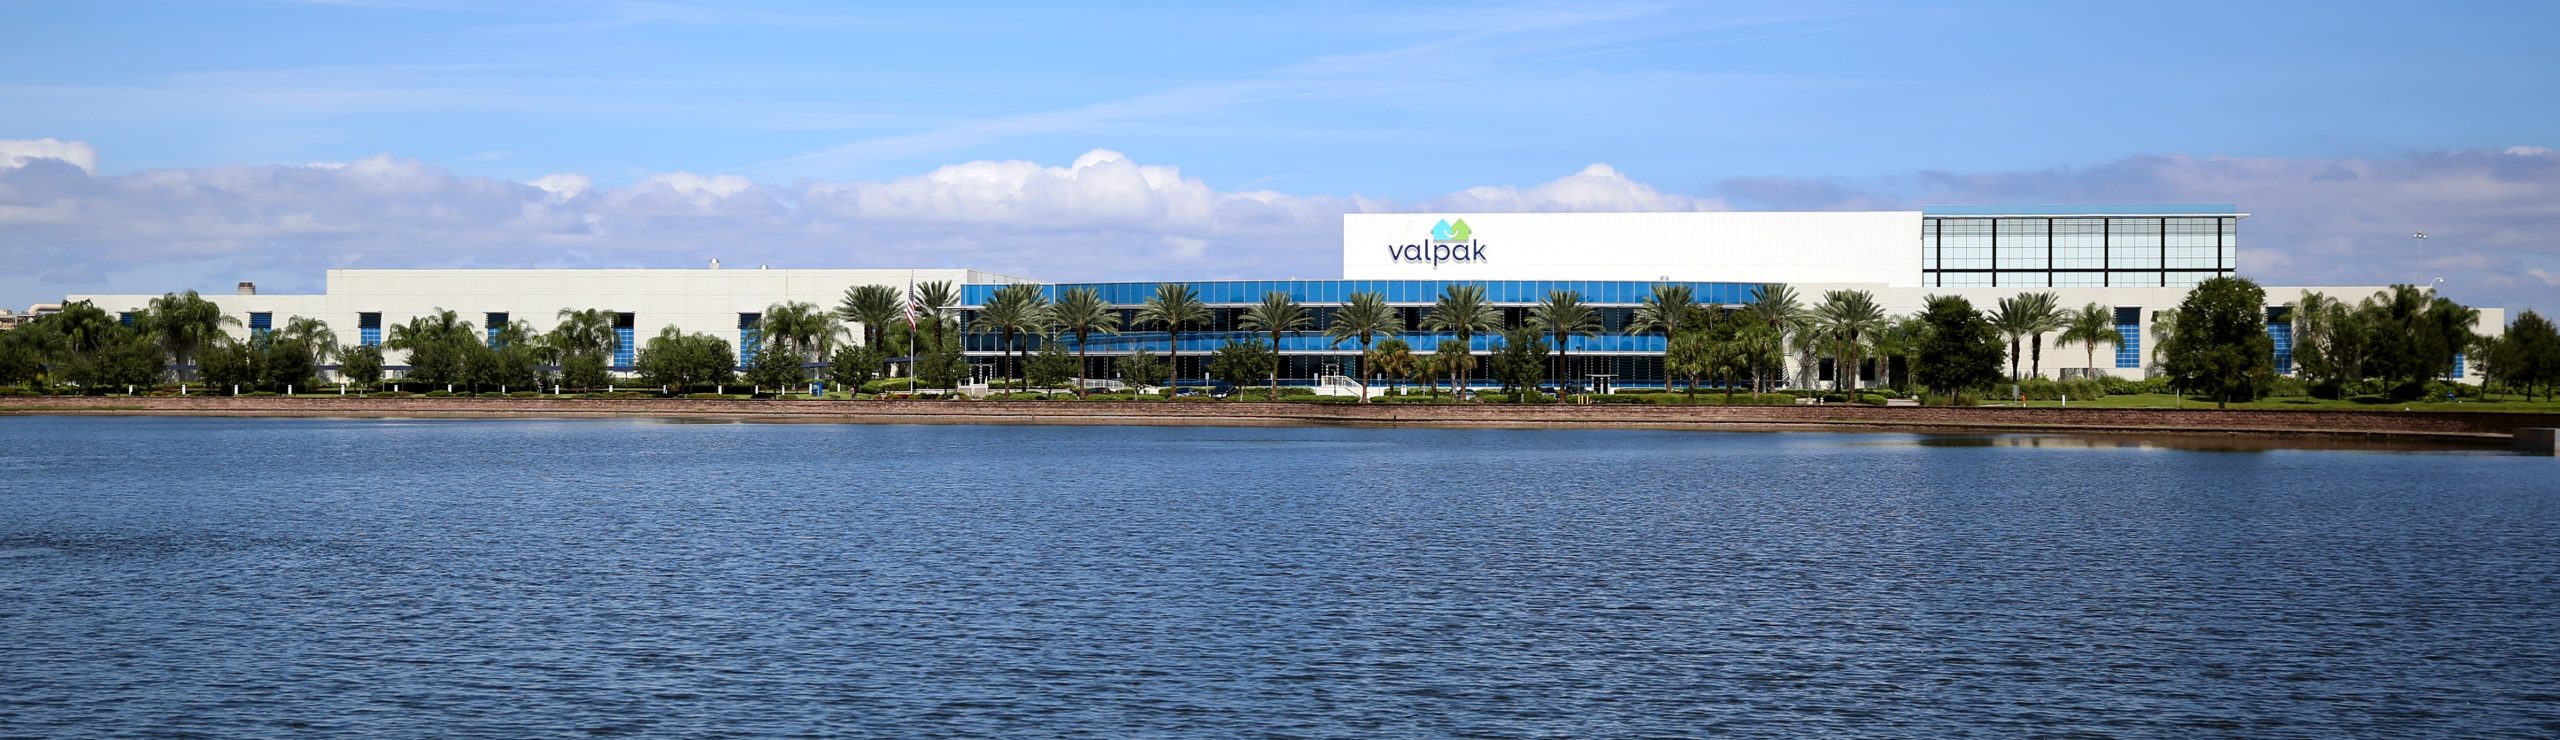 the valpak manufacturing center image